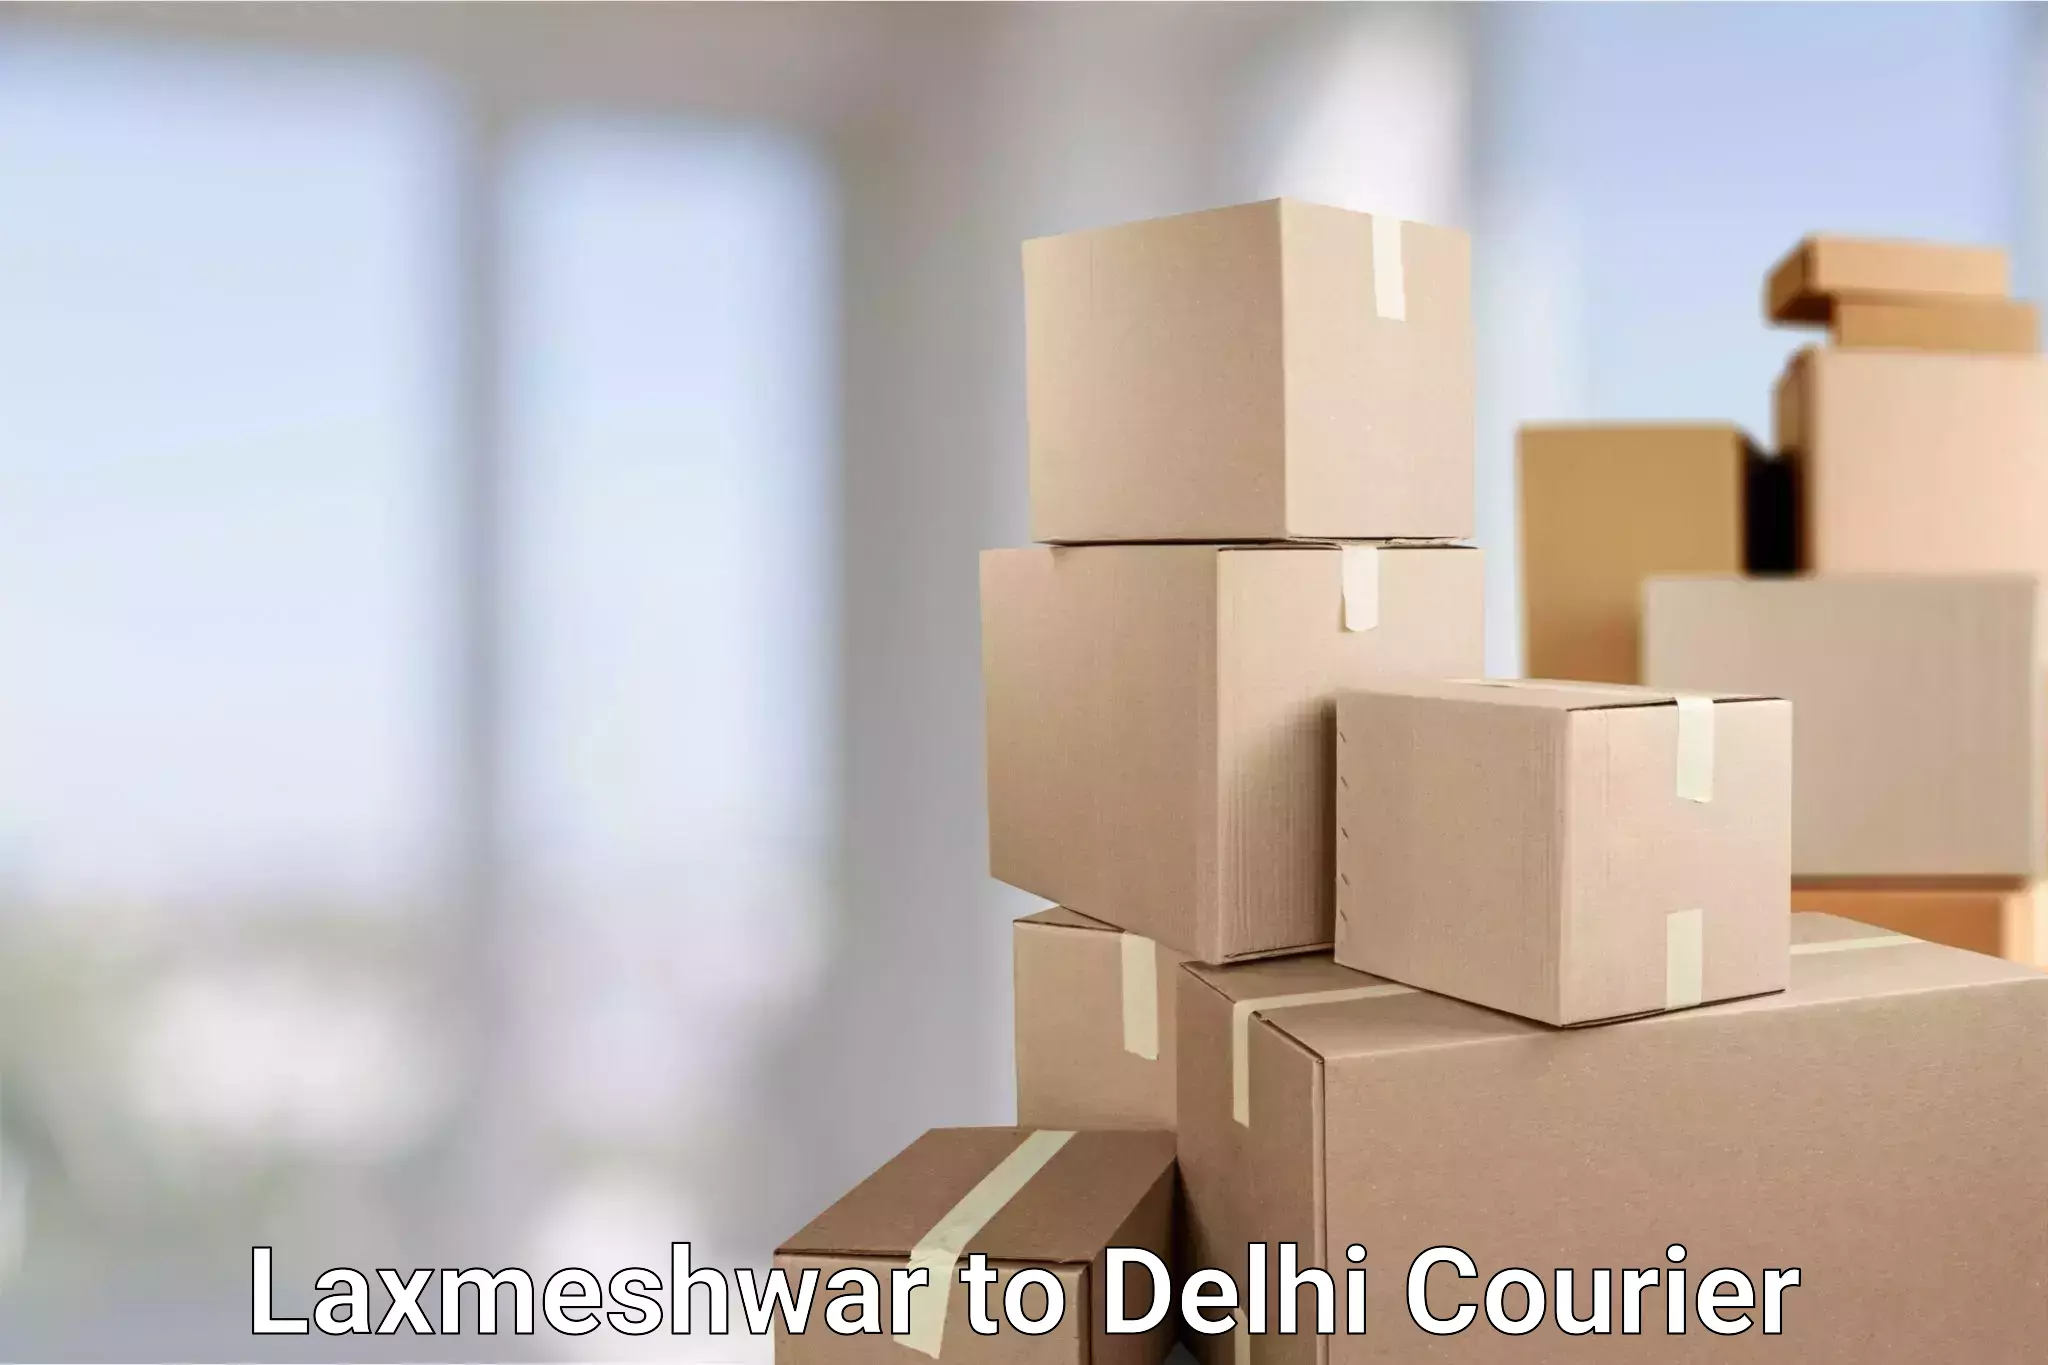 High-capacity parcel service Laxmeshwar to University of Delhi